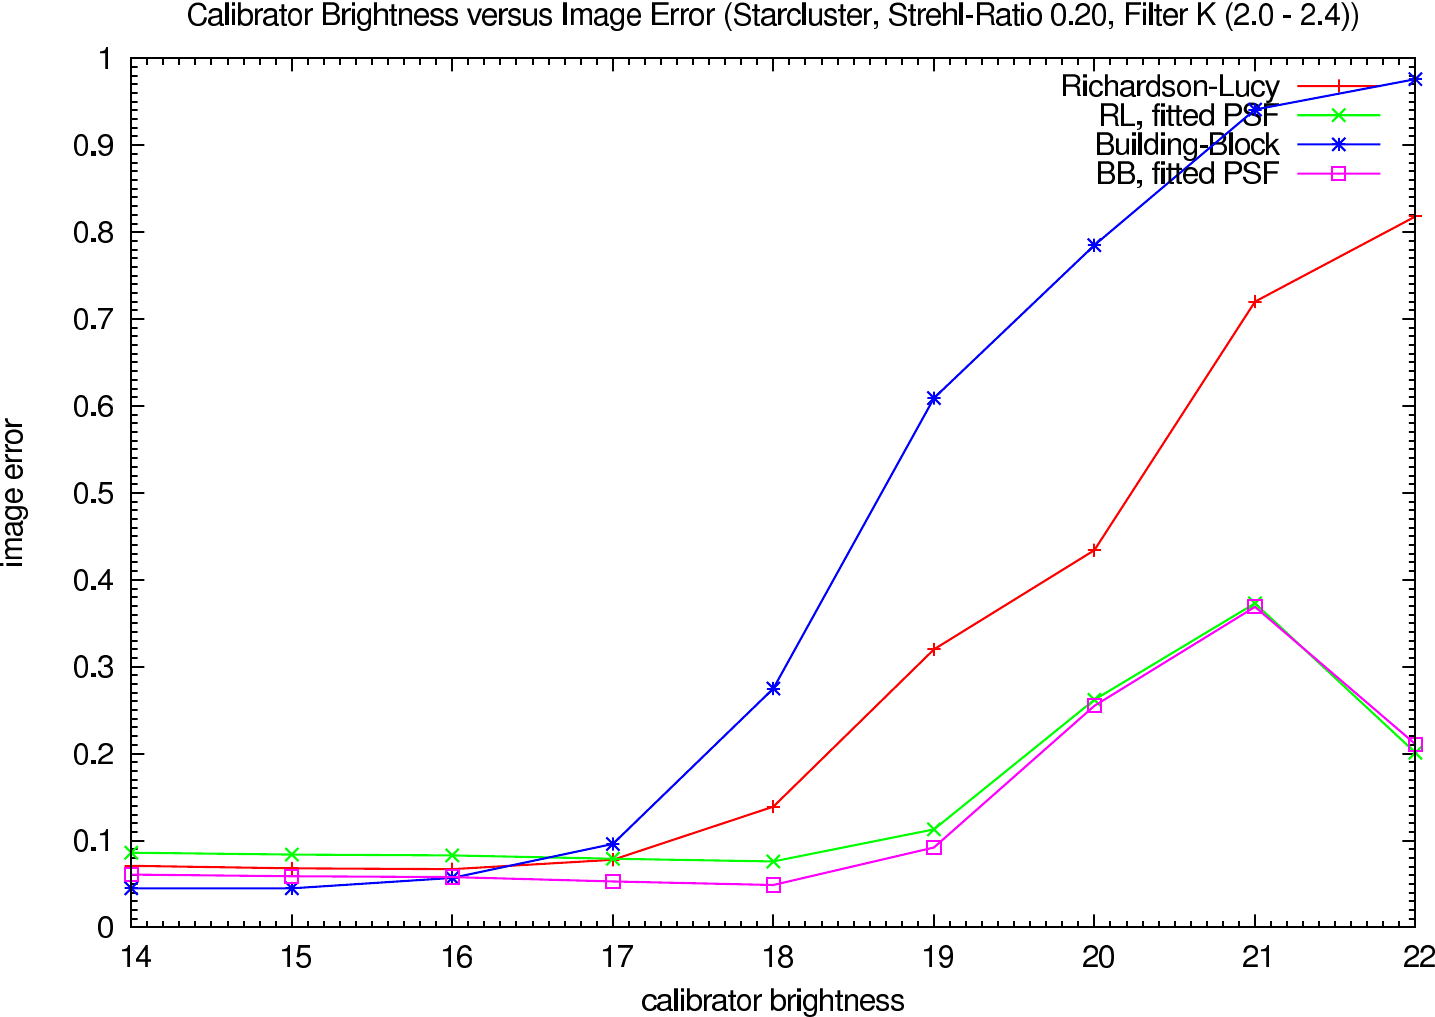 Image errors depending on the calibrator brightness, strehl ratio 0.20, K-Band